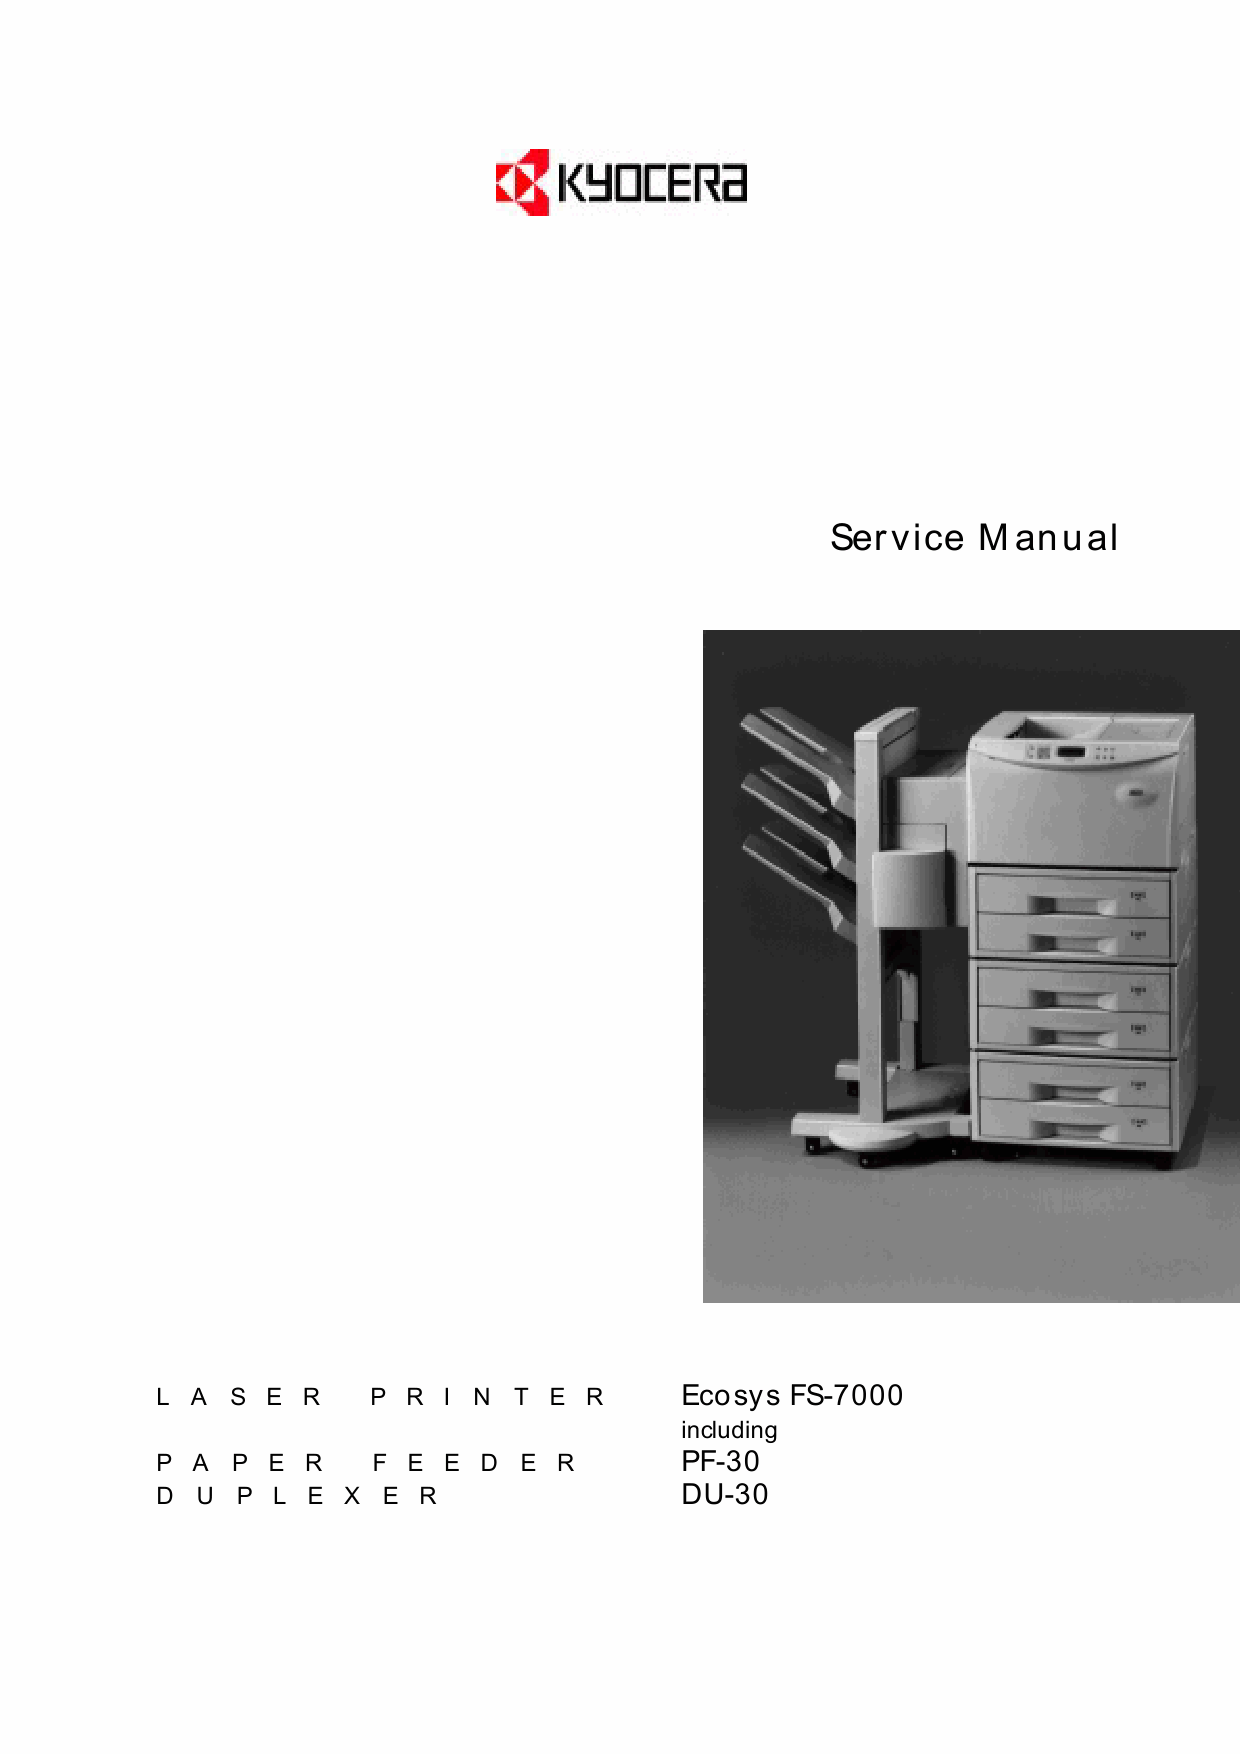 KYOCERA LaserPrinter ECOSYS-FS-7000 Parts and Service Manual-1